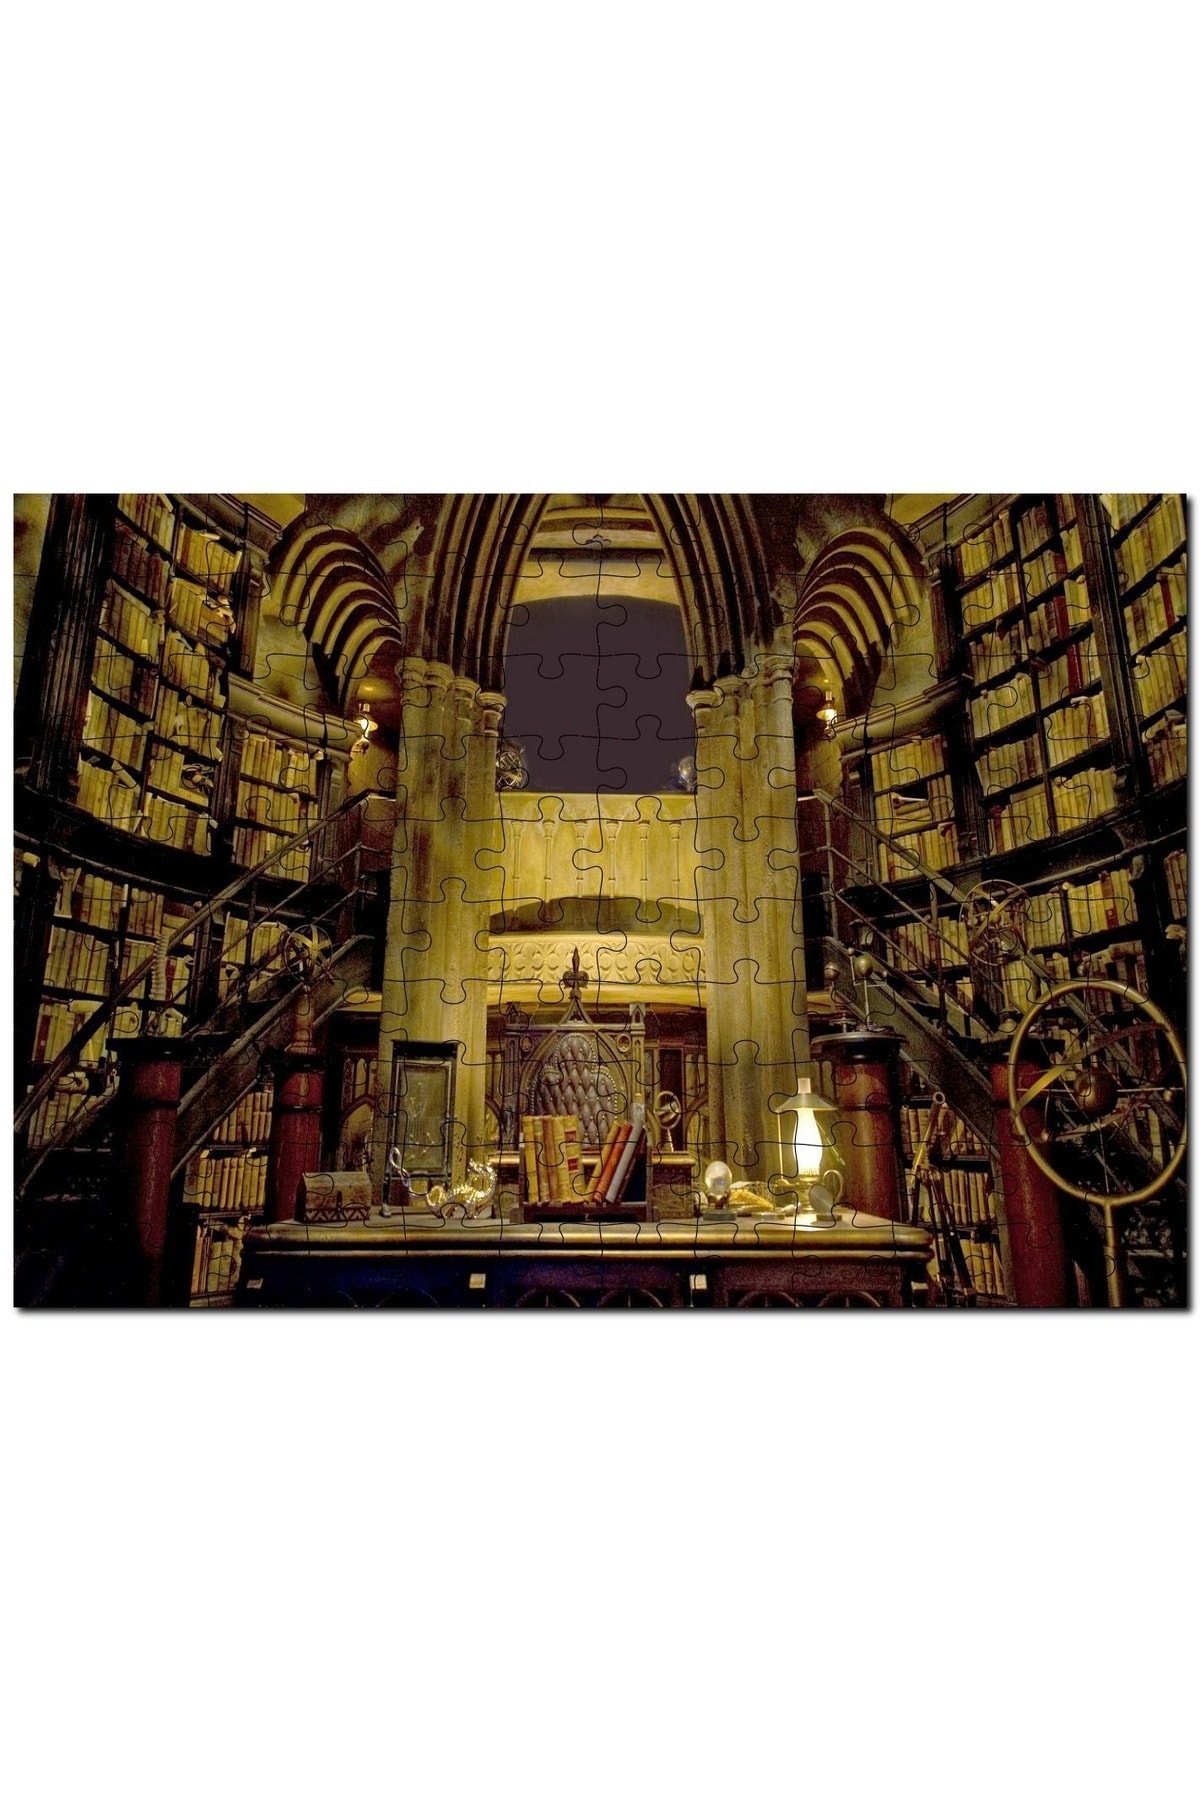 Cakapuzzle Harry Potter Kütüphane Gizli Çömlekçi Cadı 1000 Parça Puzzle Yapboz Mdf (ahşap)